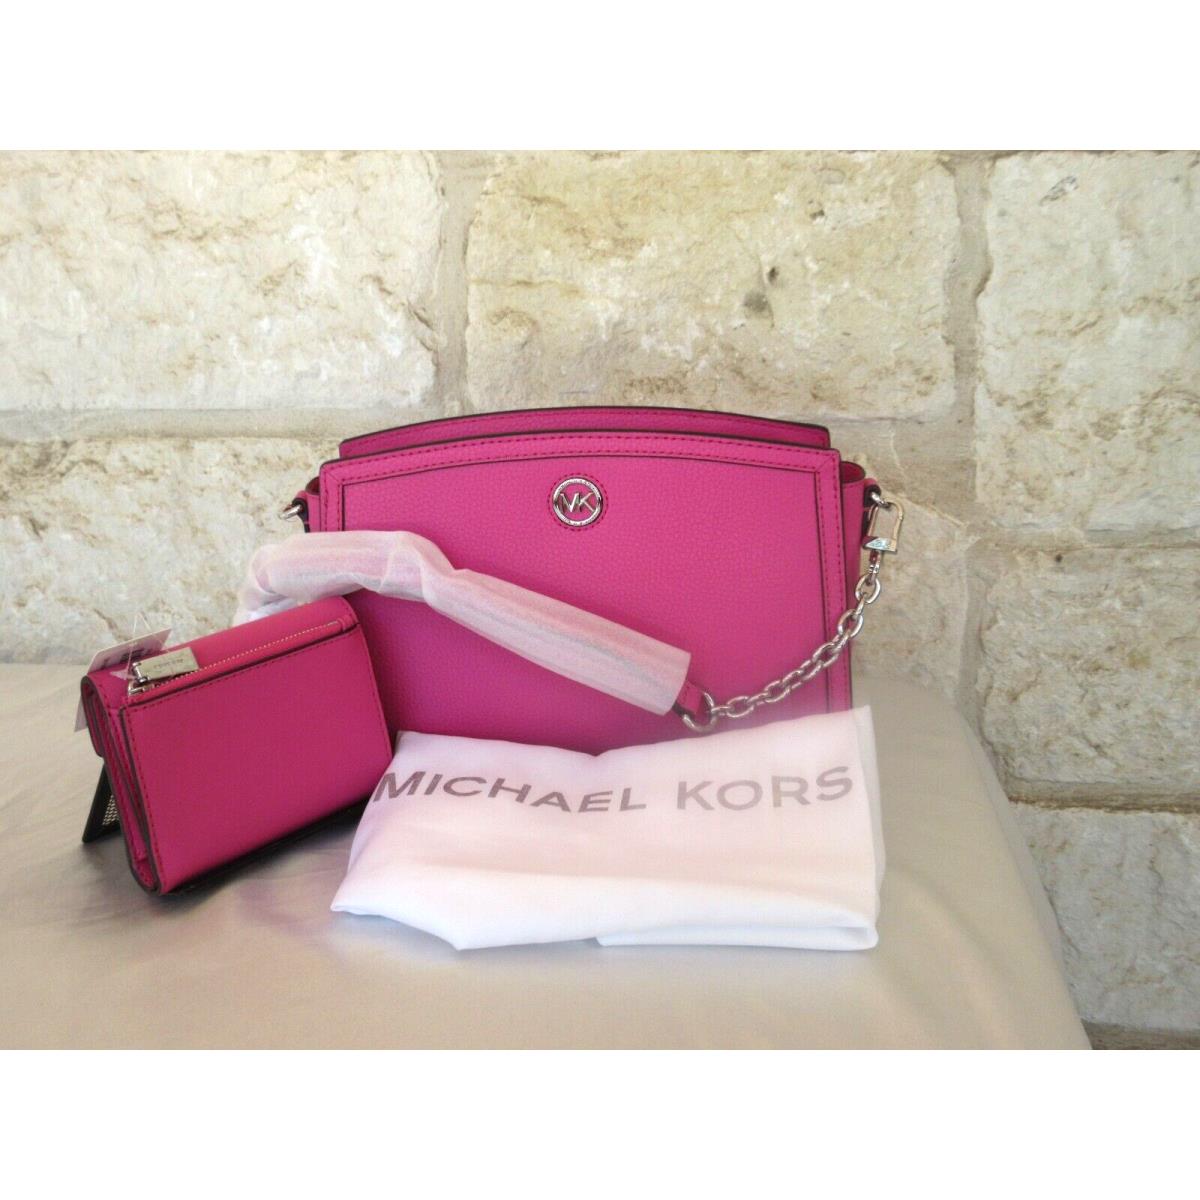 Michael Kors  bag  Chantal - Cerise/Pink Bright Colorful Handle/Strap, Silver Hardware, Cerise (Pink) Silver hardware Exterior 11